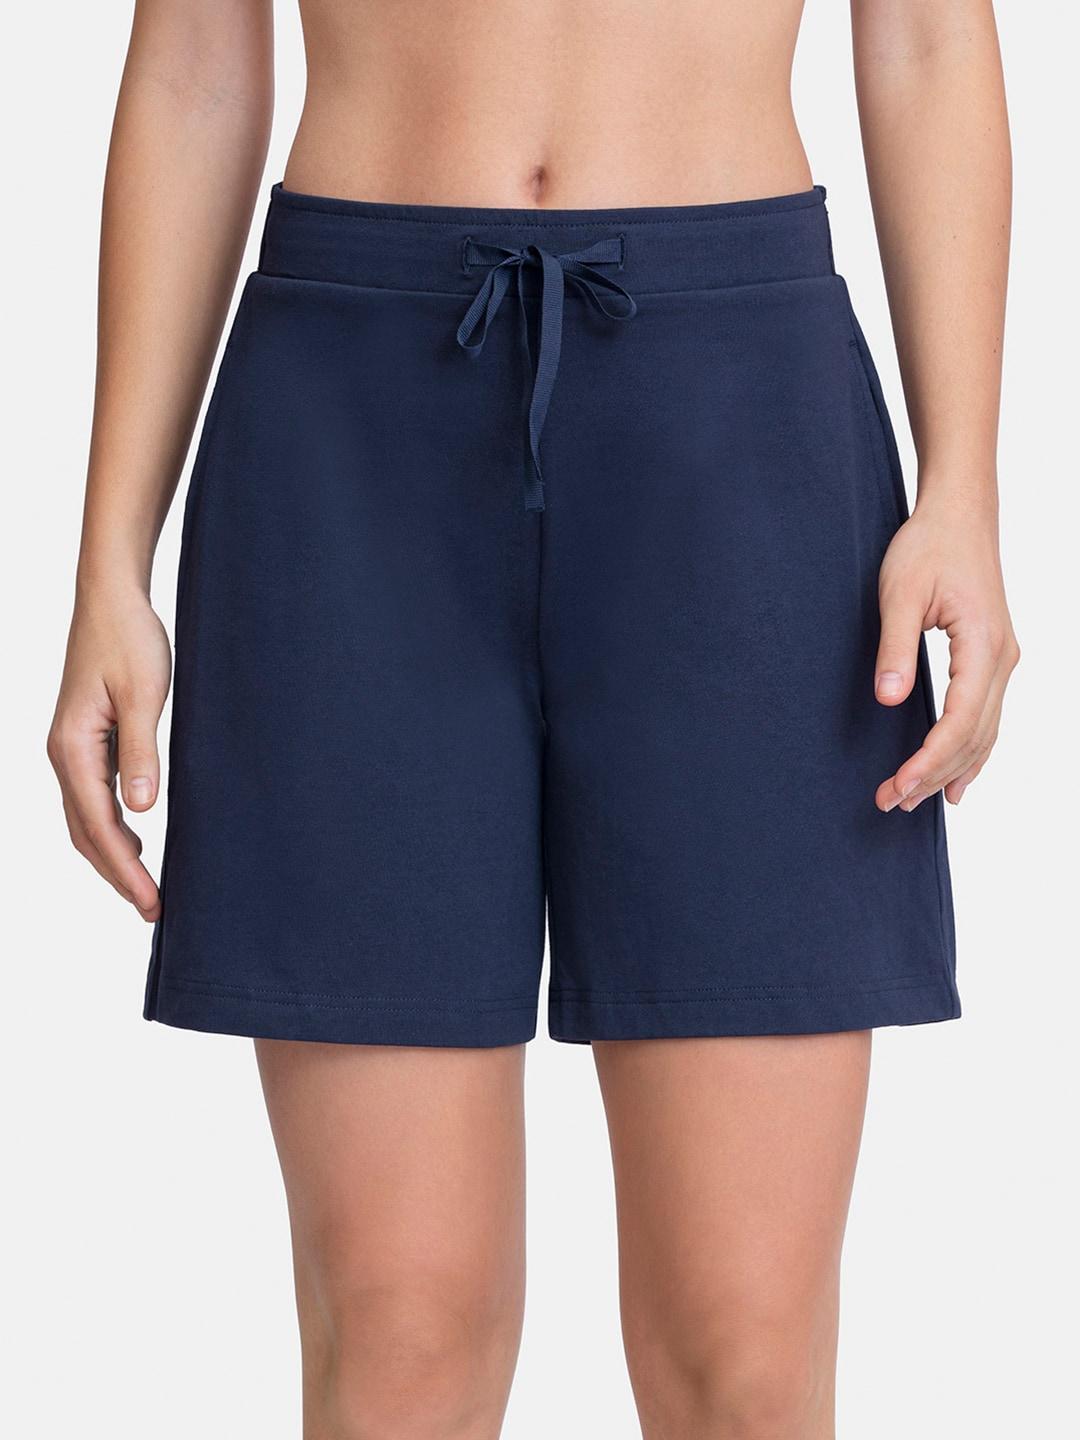 amante-women-navy-blue-solid-cotton-lounge-shorts